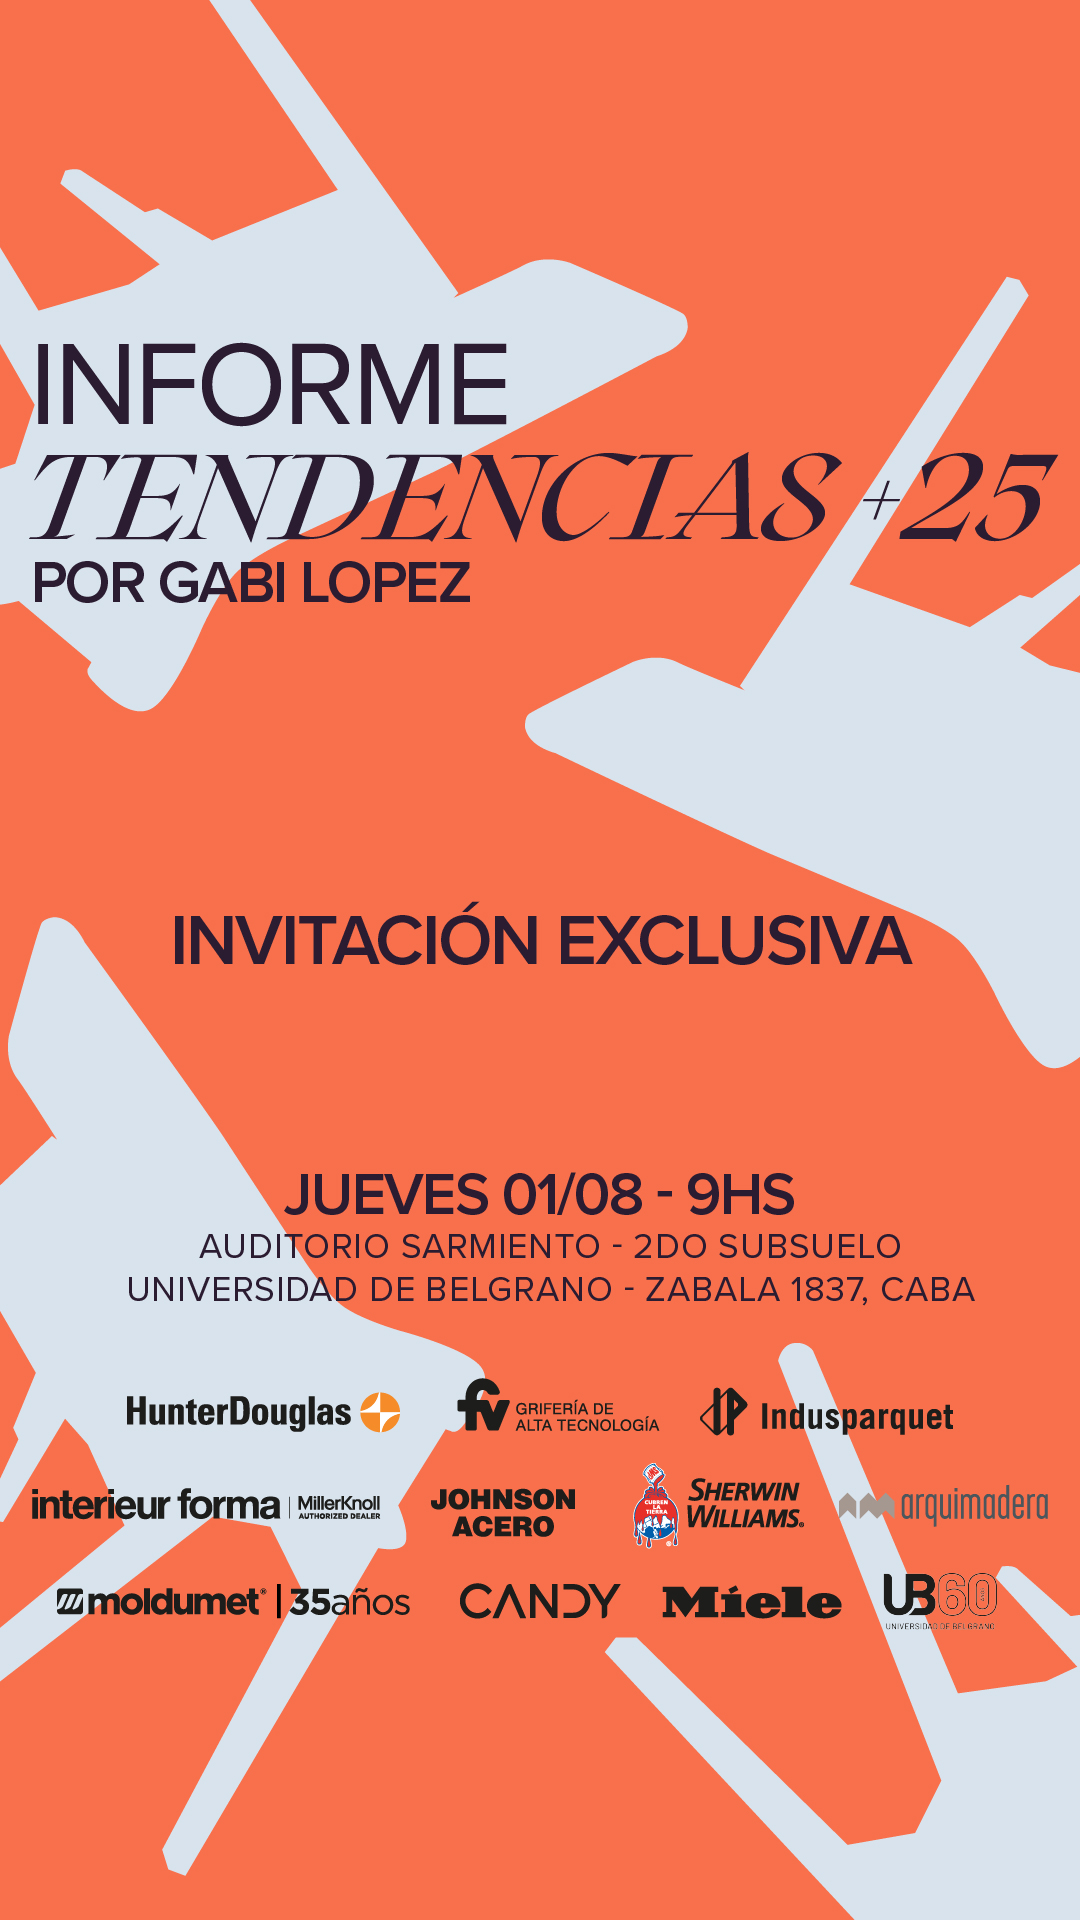 Informe Tendencias +25 por Gabi López